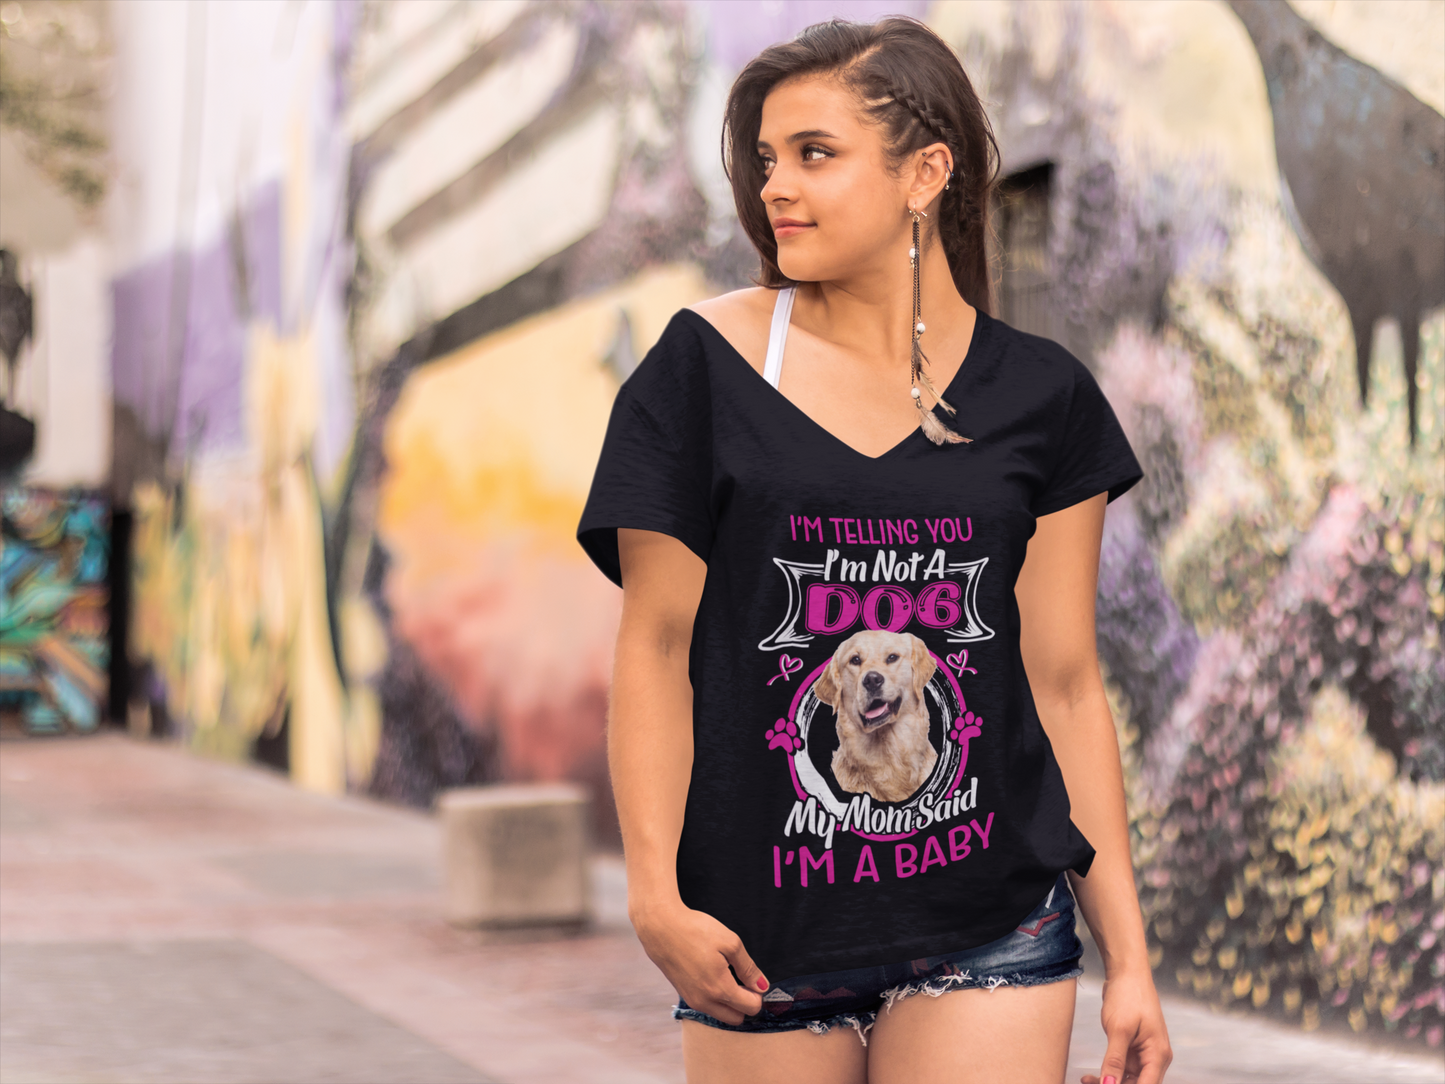 ULTRABASIC Women's T-Shirt I'm Telling You I'm Not a Golden Retriever - My Mom Said I'm a Baby - Cute Puppy Dog Lover Tee Shirt